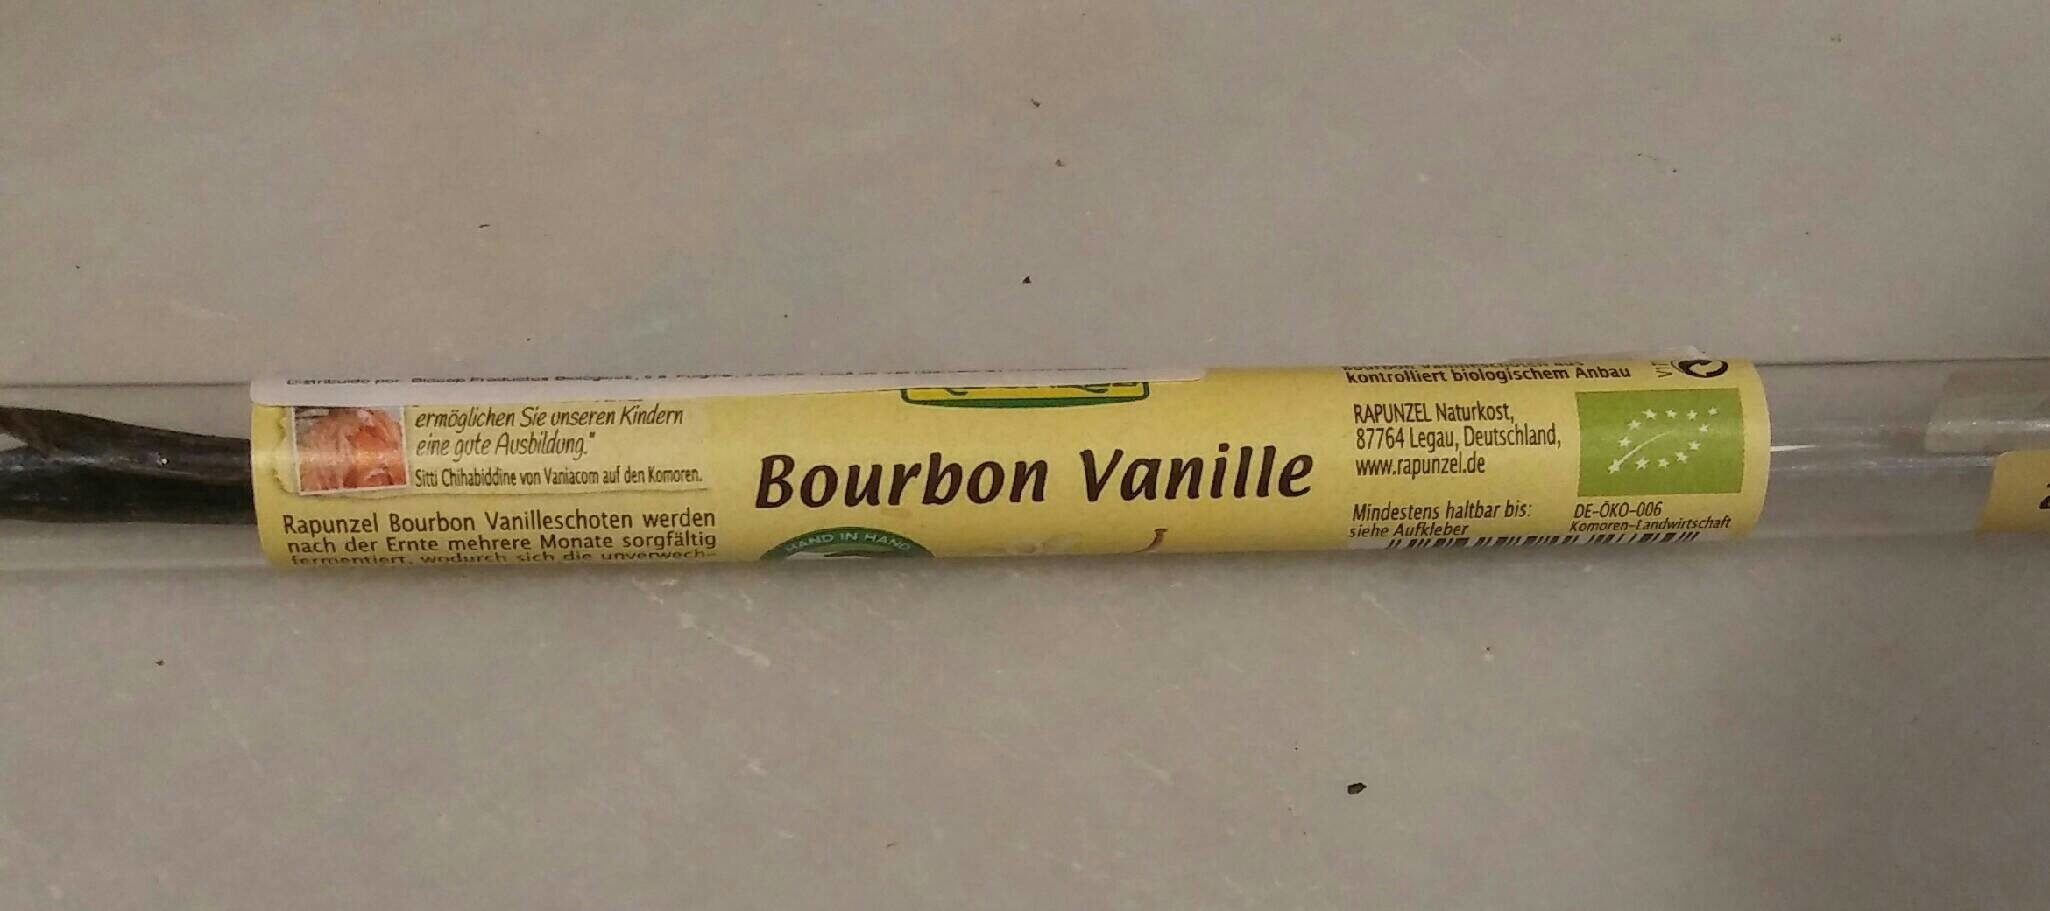 Bourbon Vanille Schoten - Producto